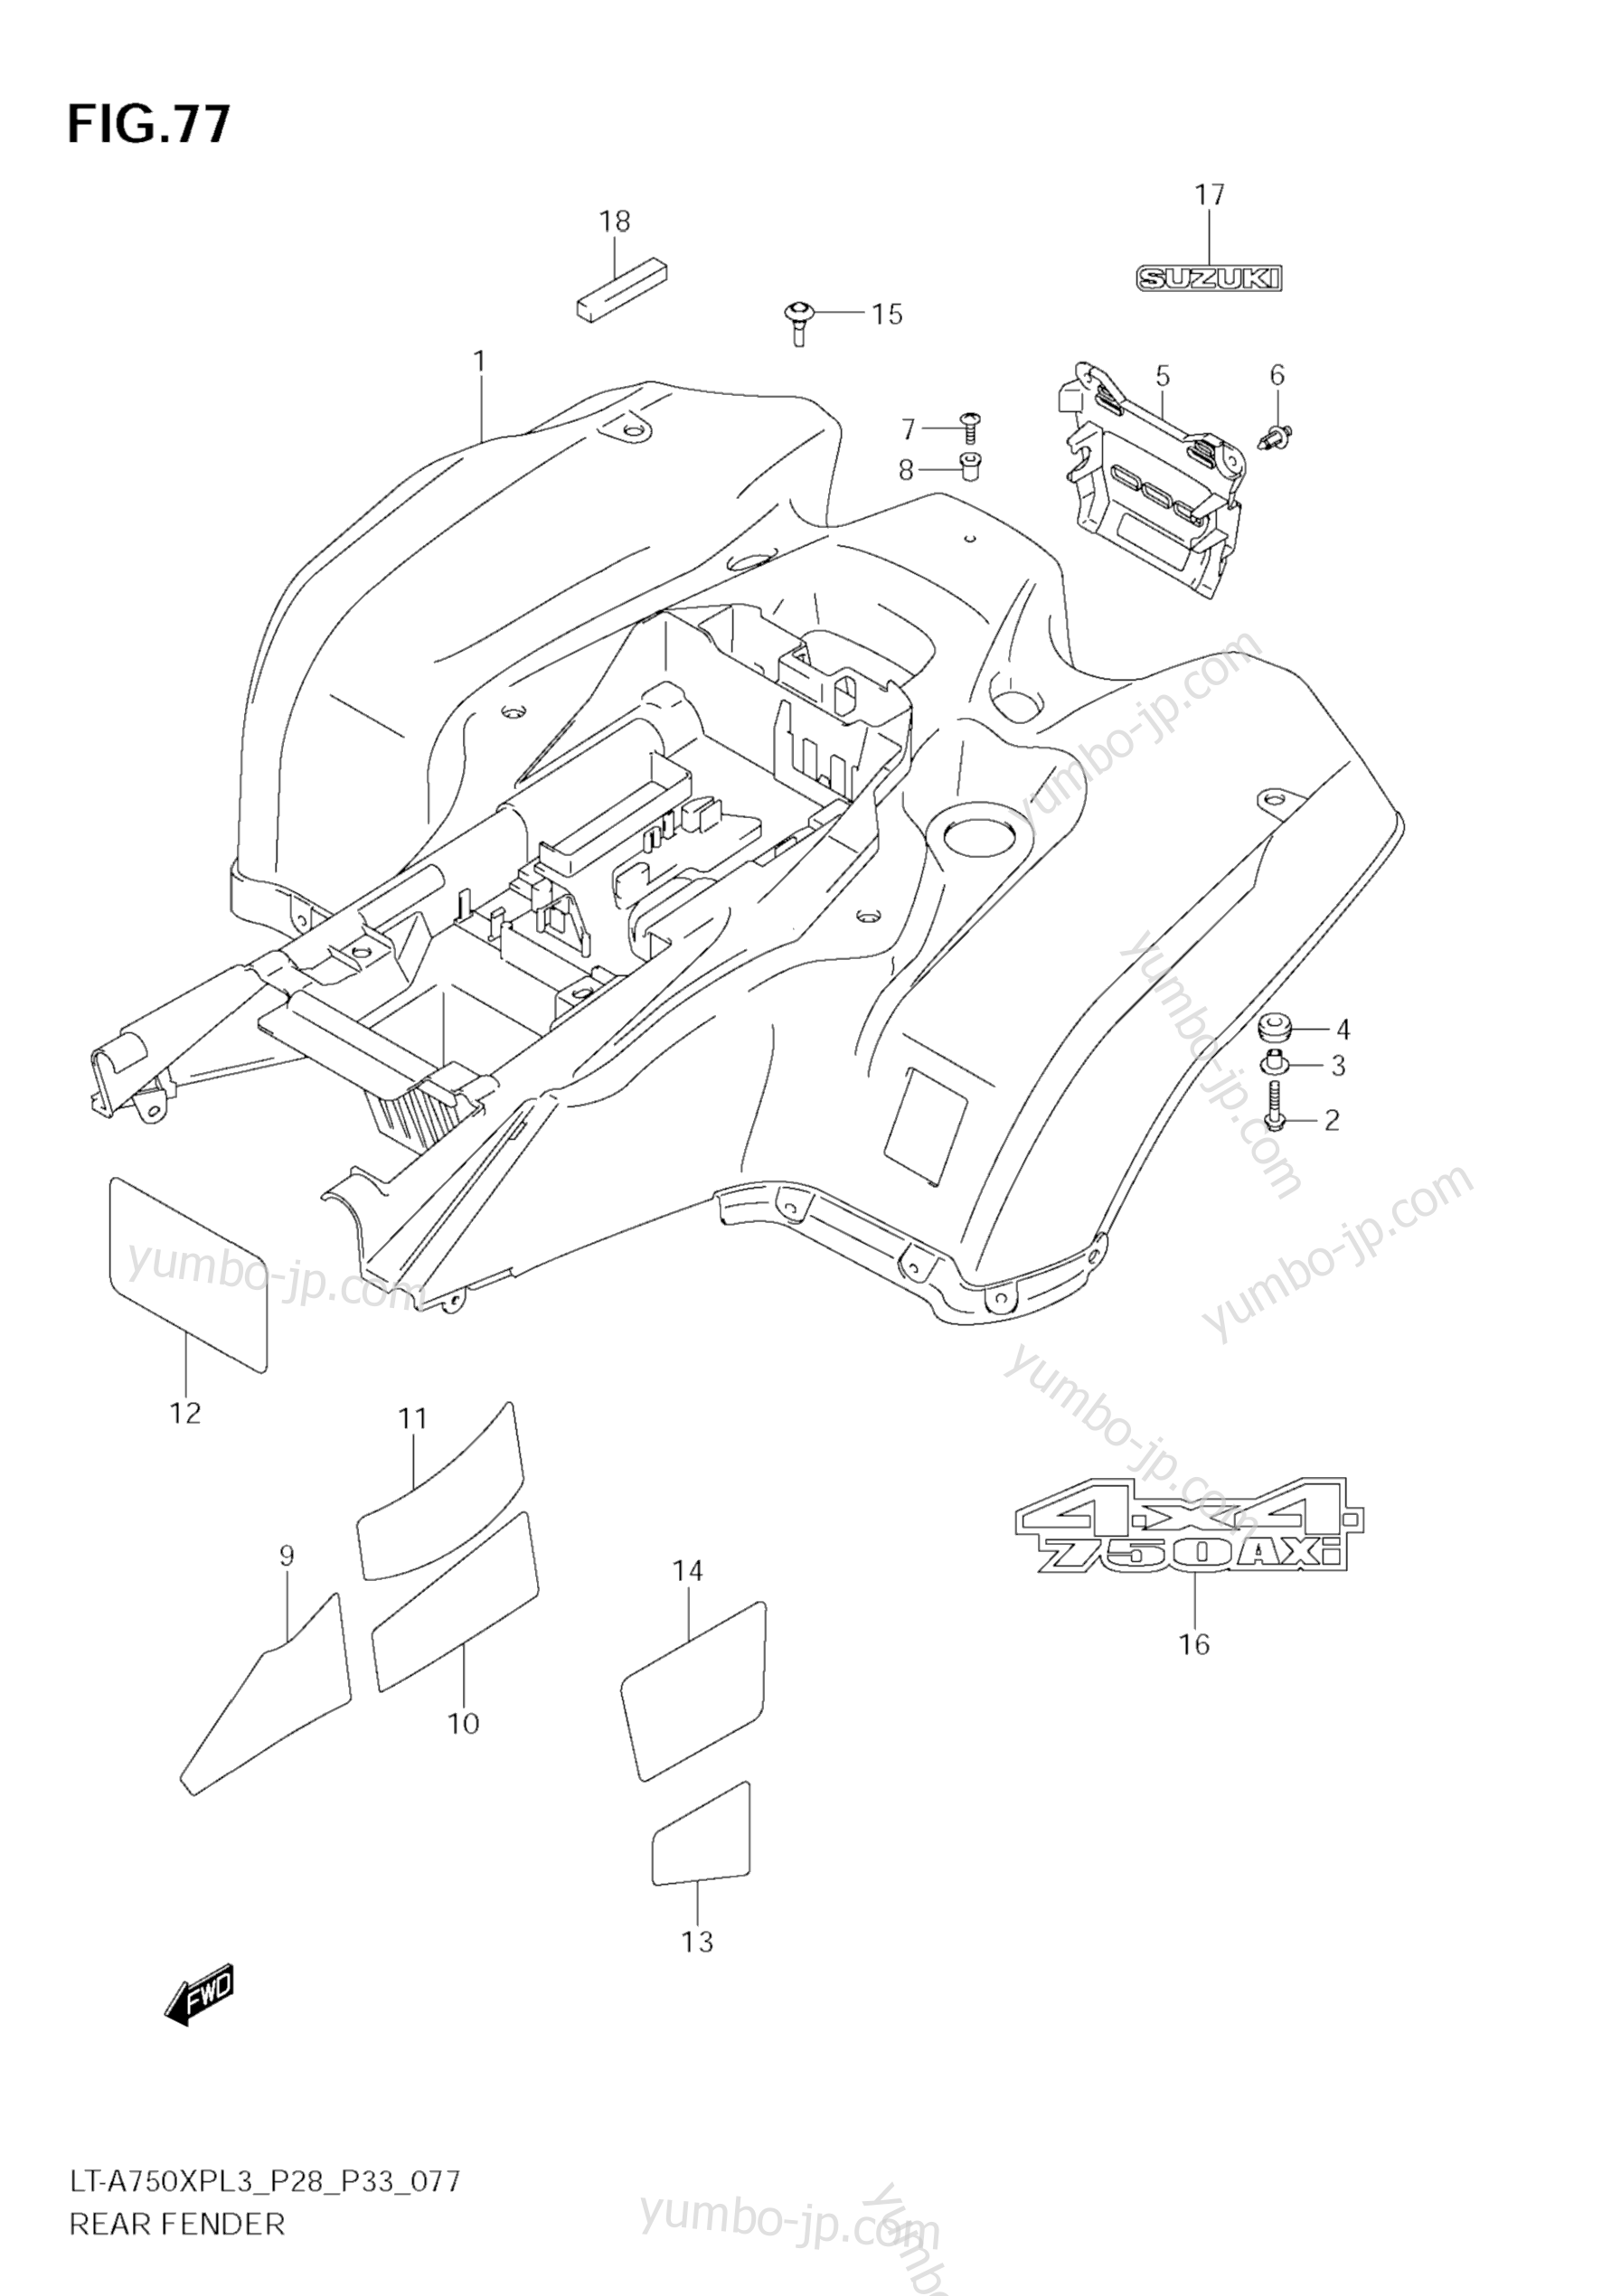 REAR FENDER (LT-A750XPZL3 E33) for ATVs SUZUKI KingQuad (LT-A750XPZ) 2013 year